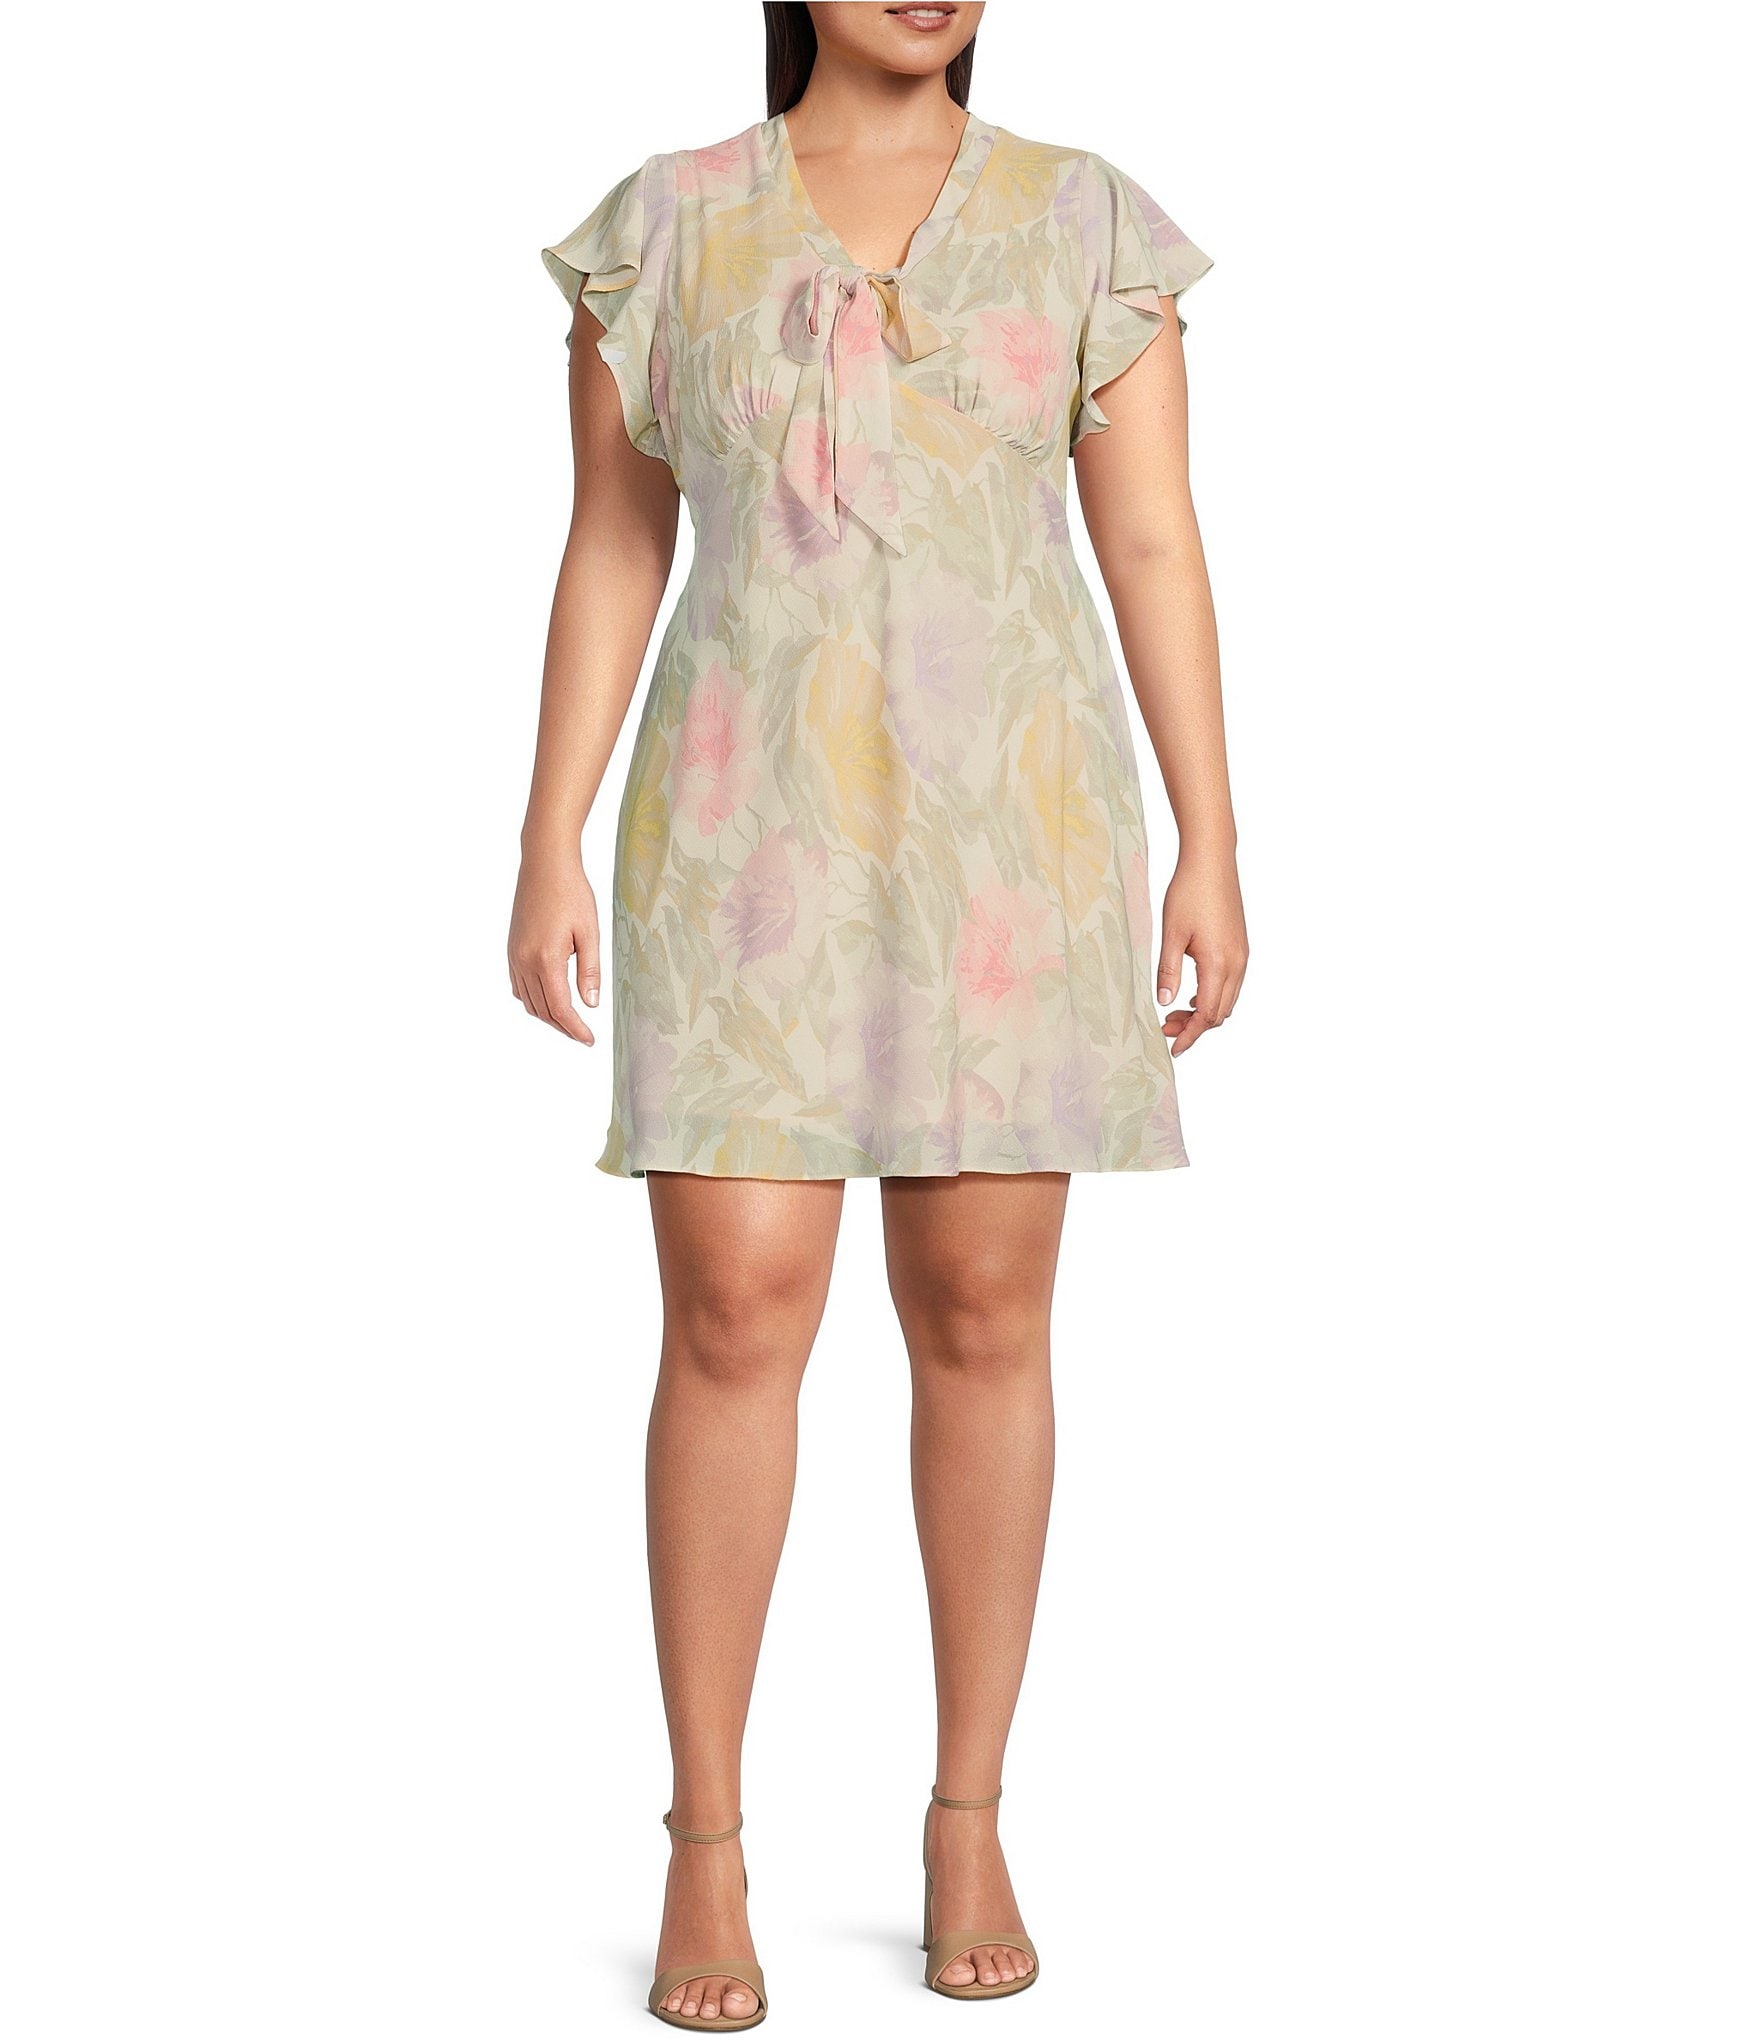 Lauren Ralph Lauren Plus Size Off-The-Shoulder Dress - White Stripe